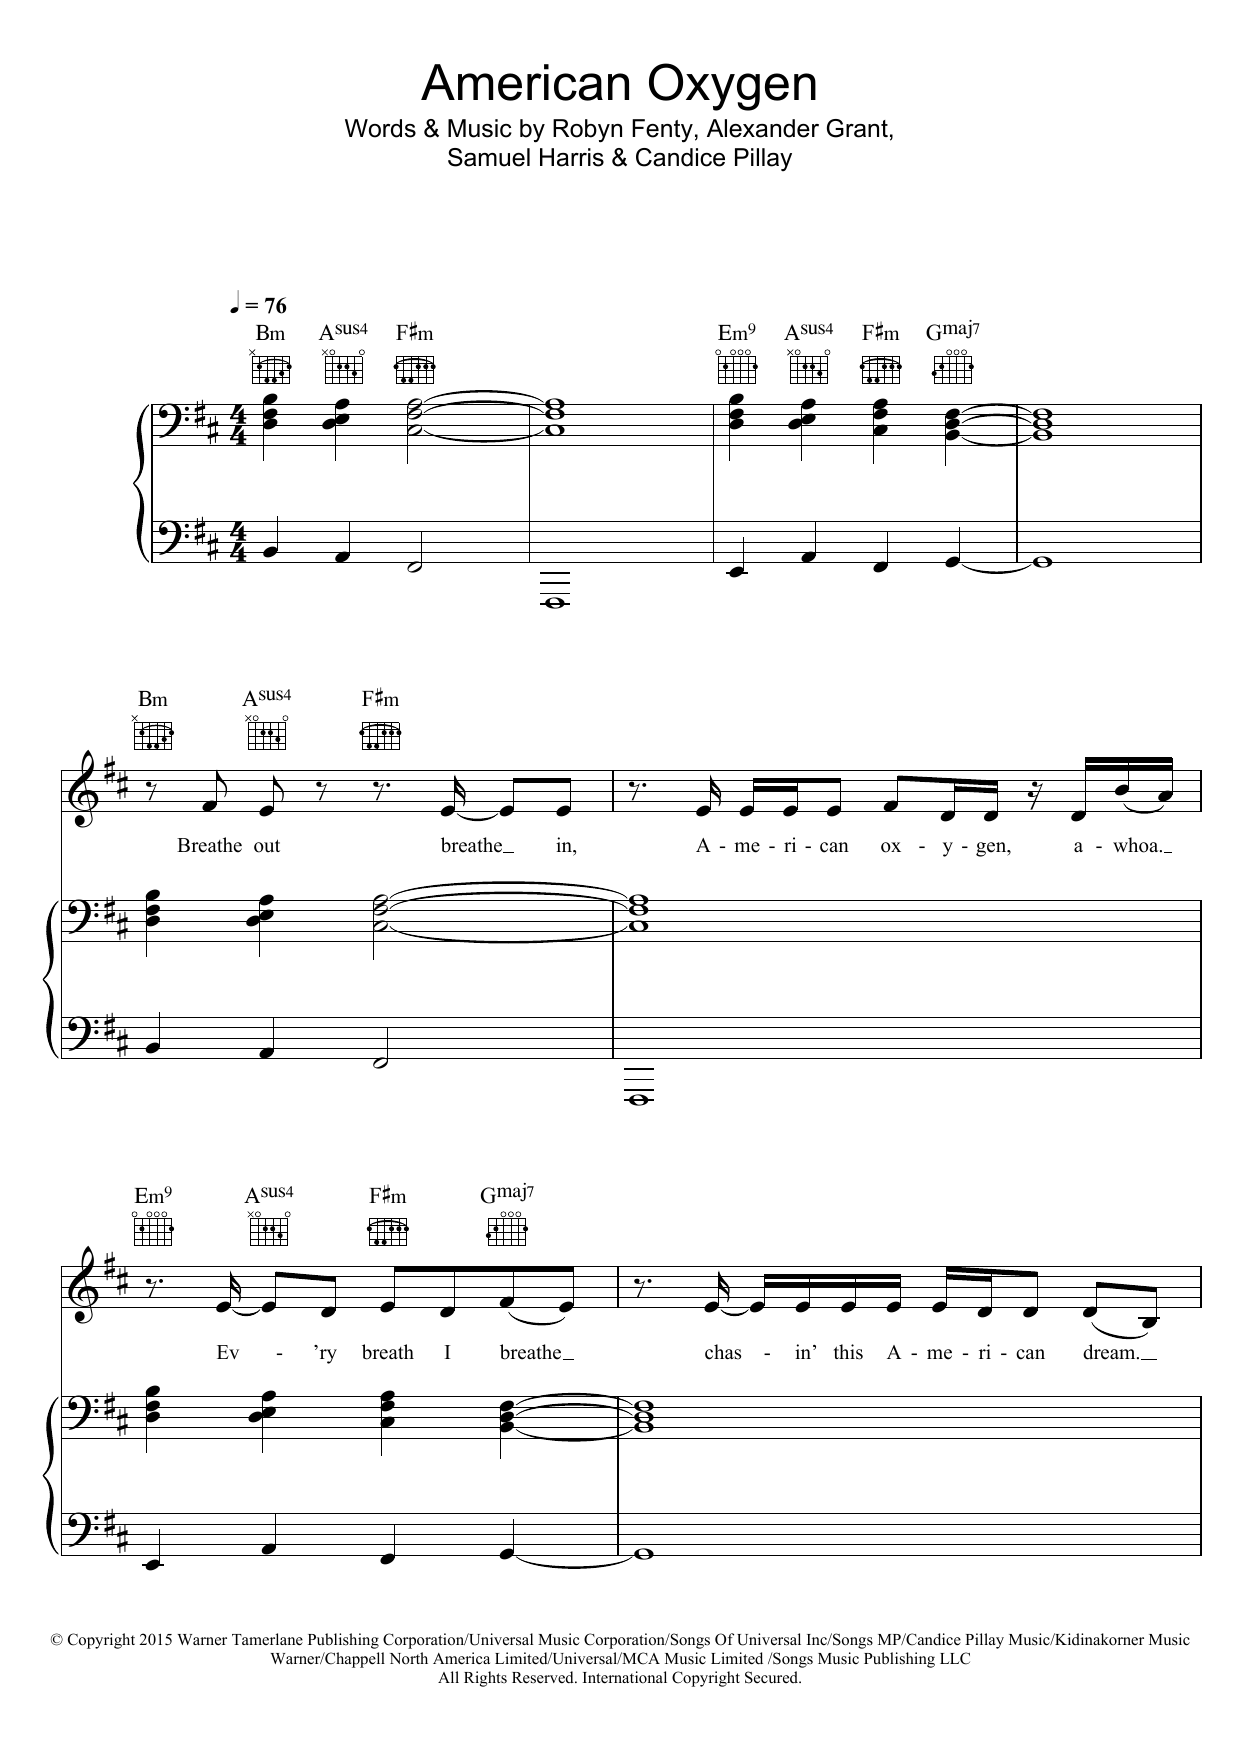 Rihanna American Oxygen sheet music notes printable PDF score